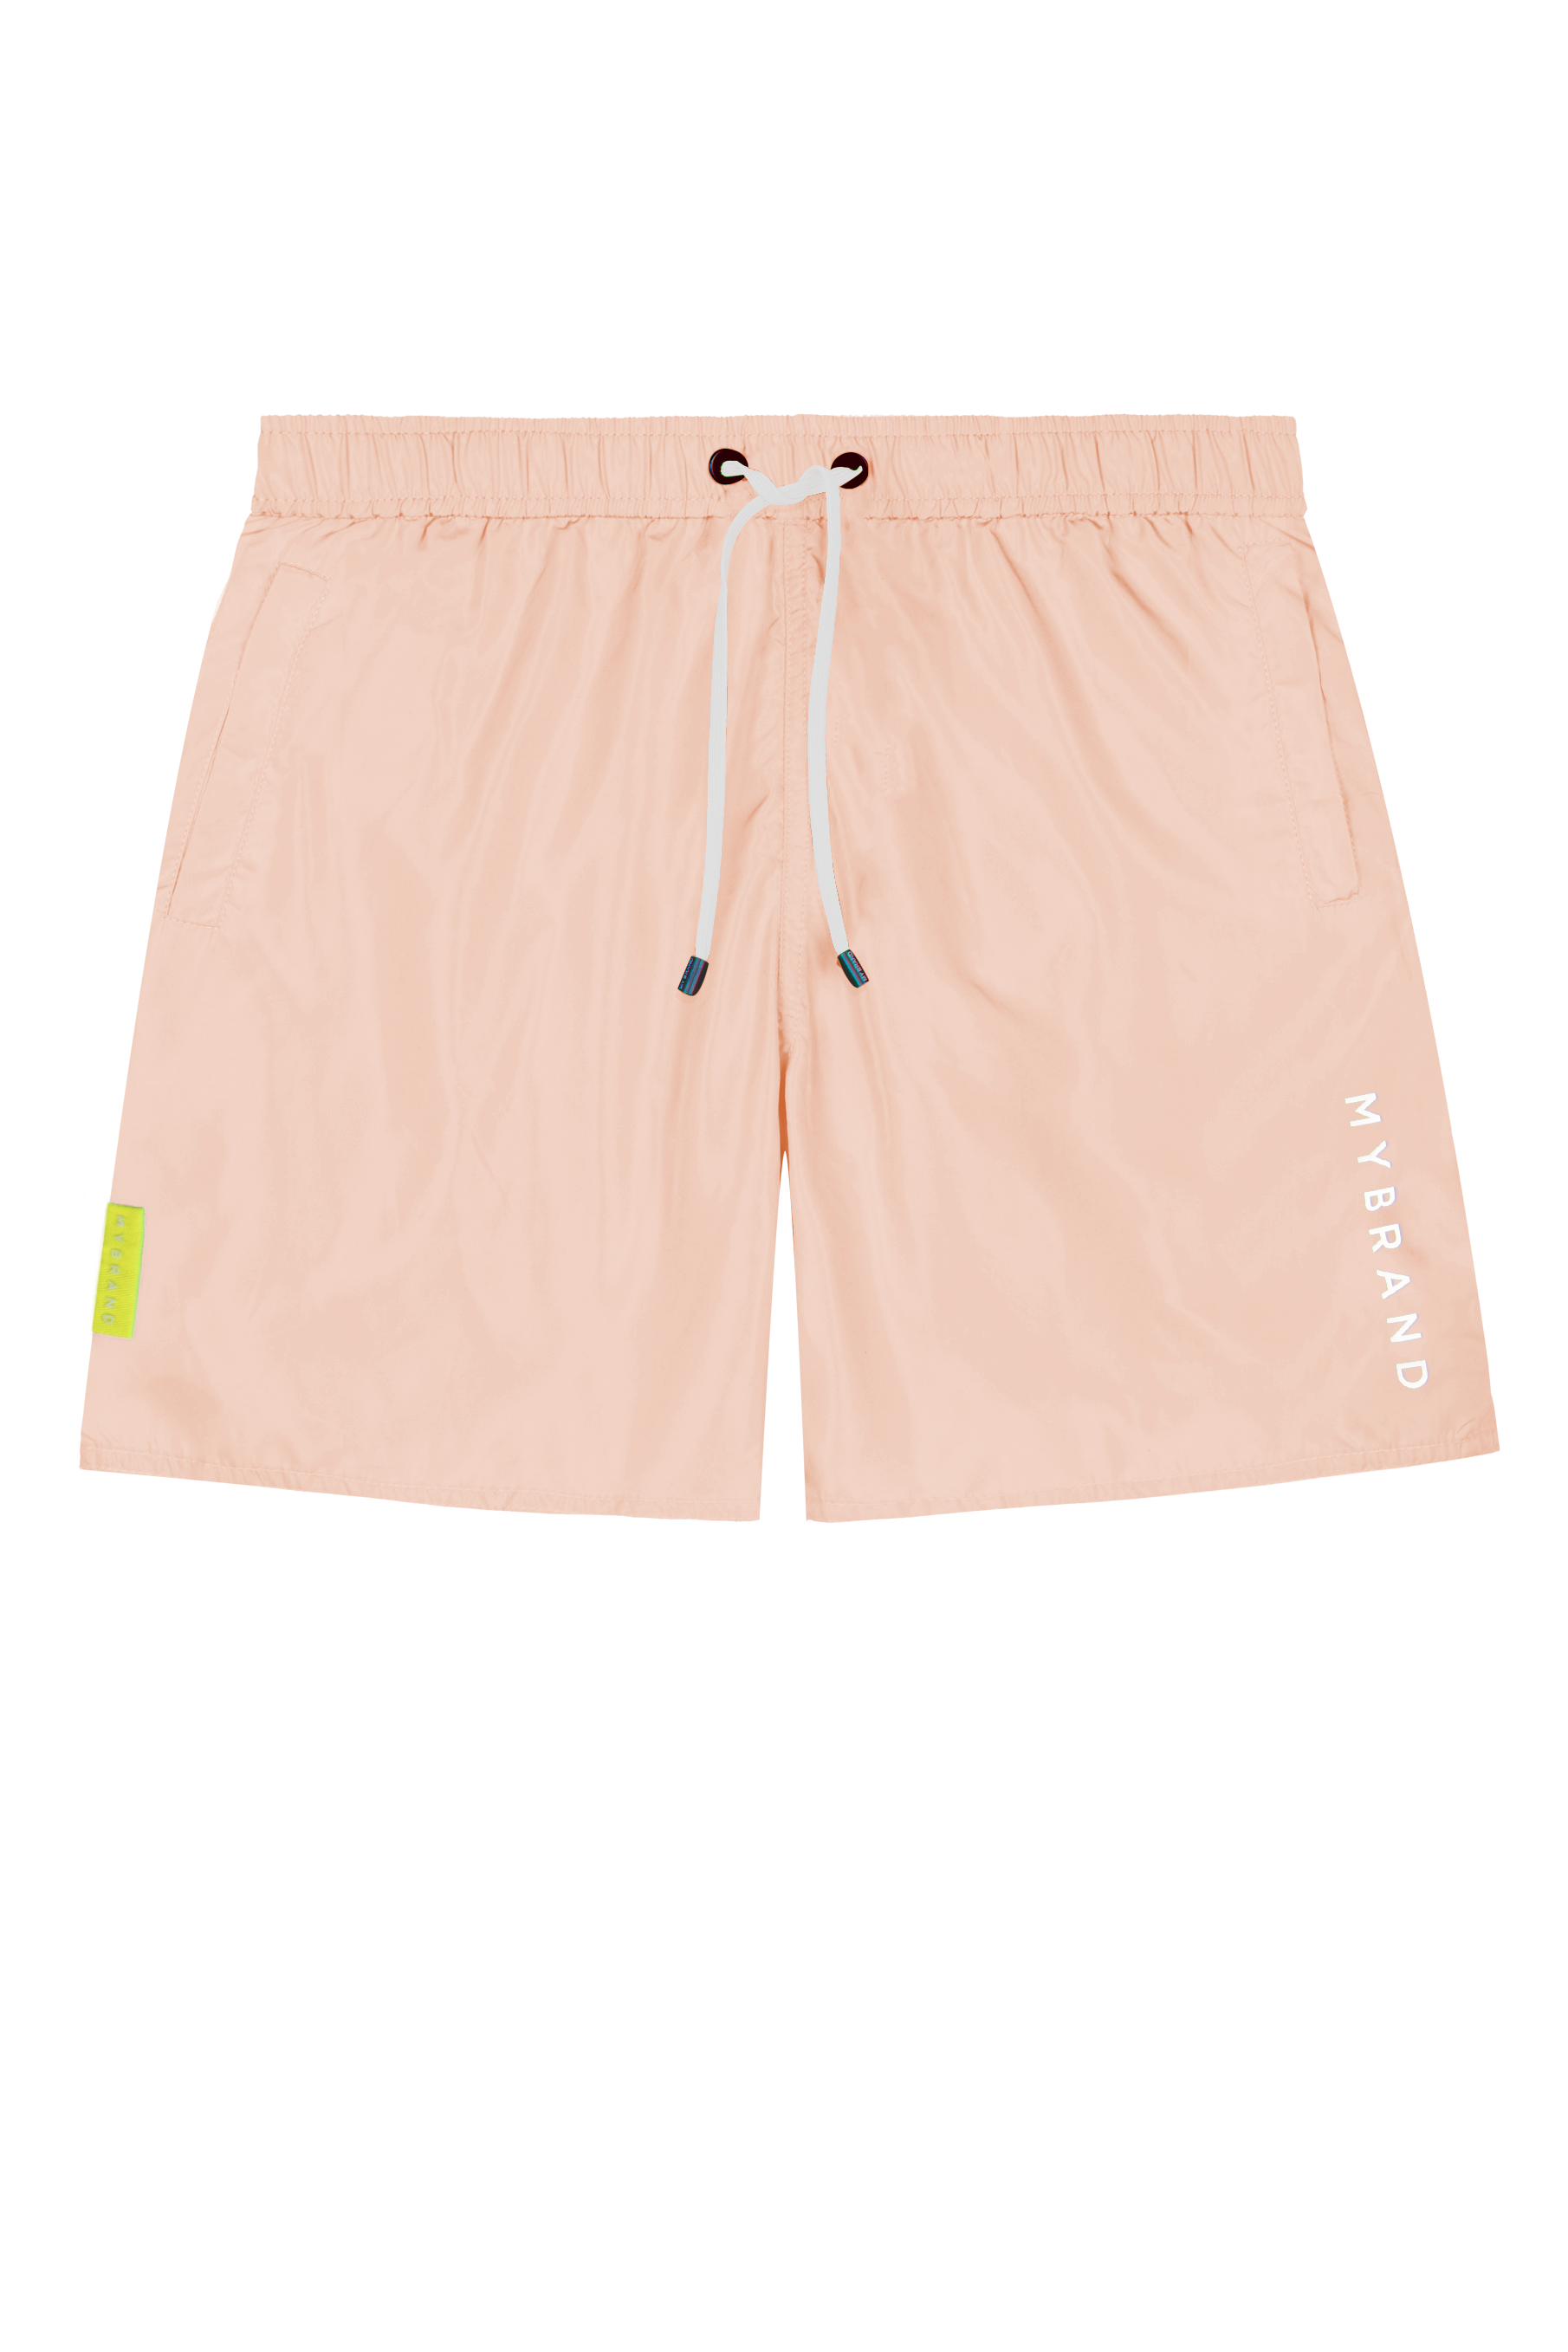 Basic Swim Capsule Short Pastel Pink